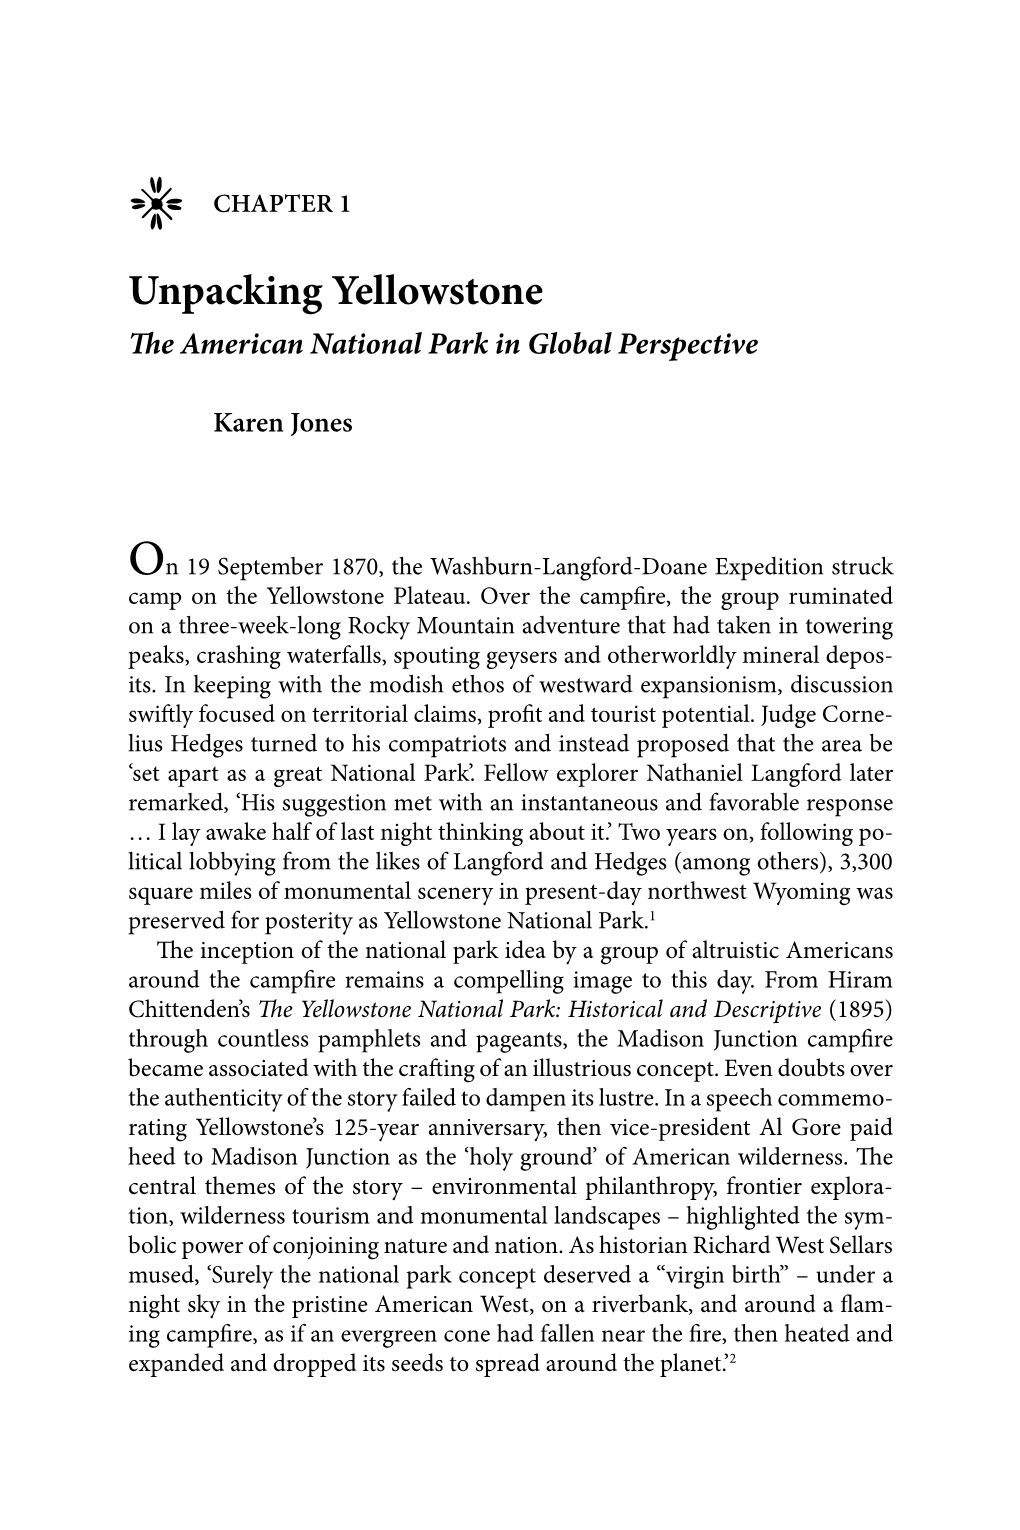 Chapter 1. Unpacking Yellowstone